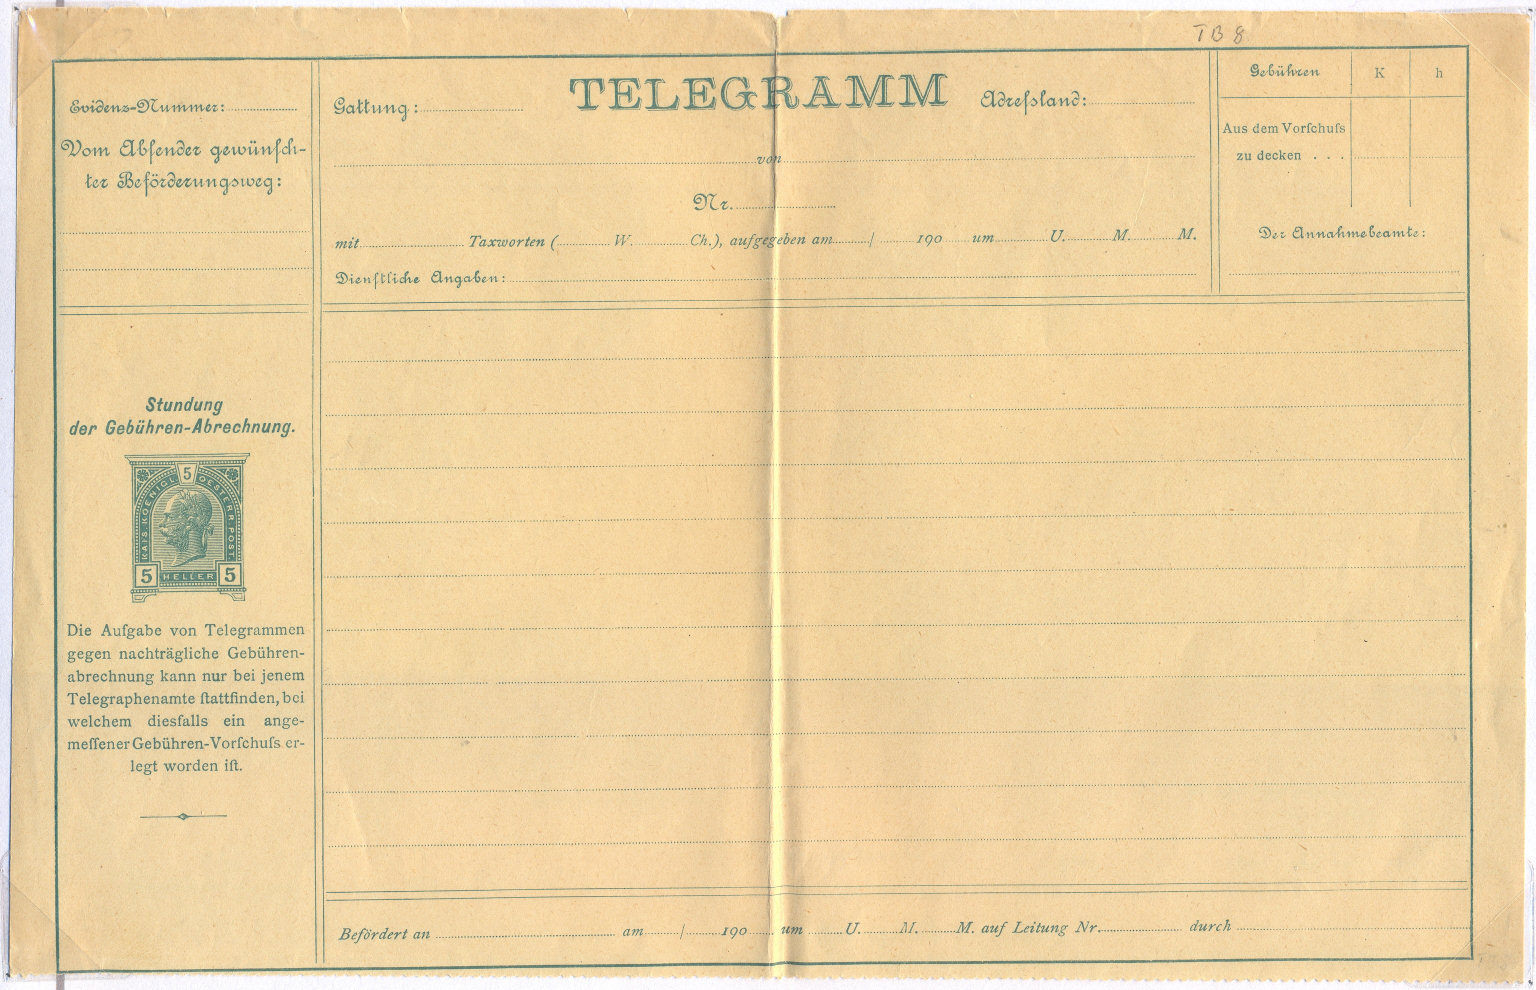 Telegram Form - 1900